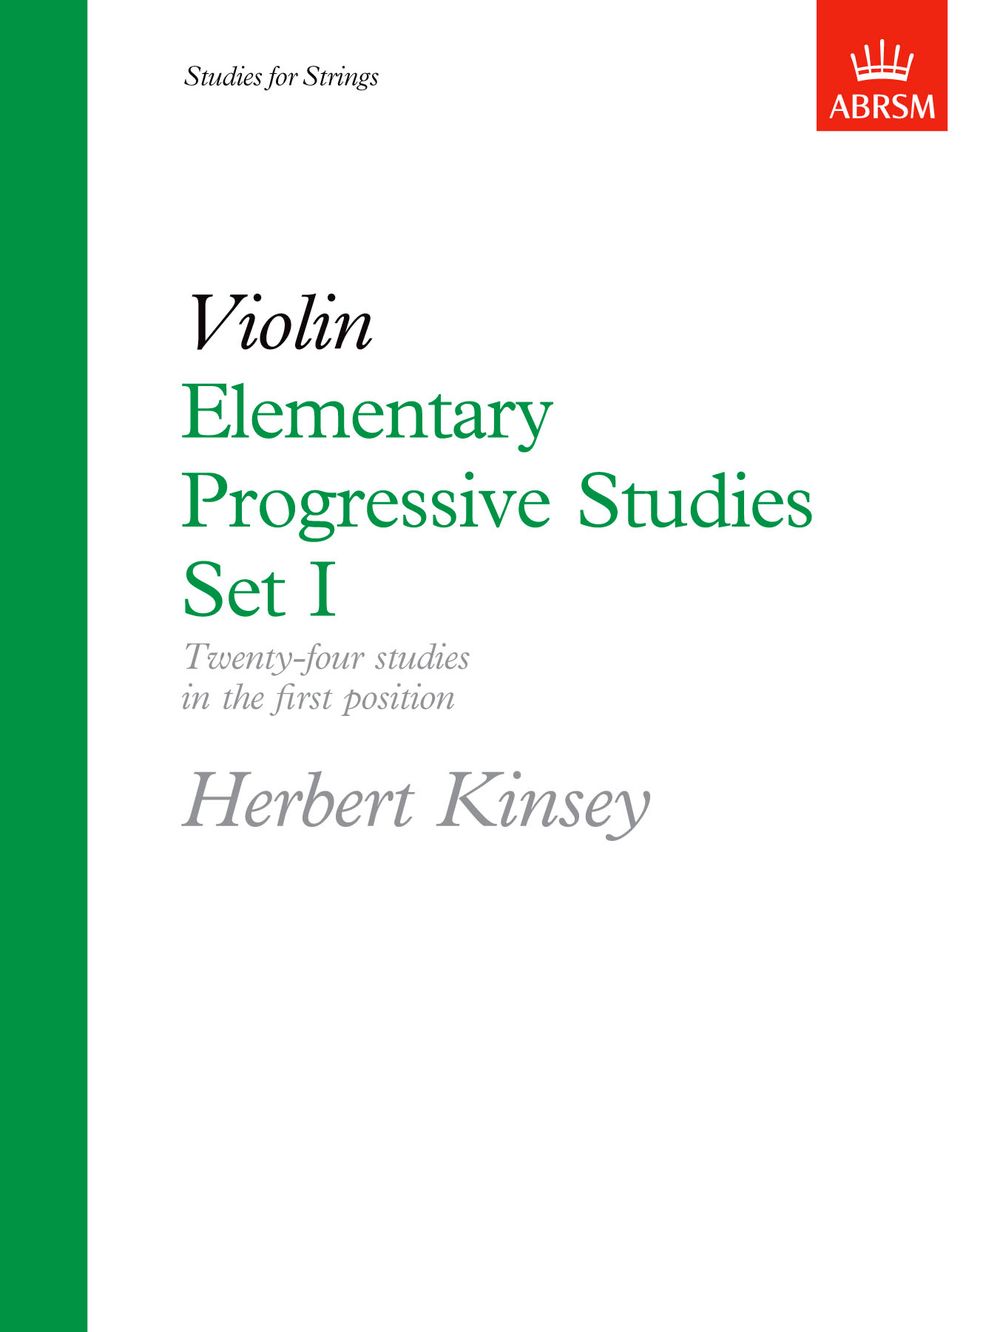 Herbert Kinsey: Elementary Progressive Studies  Set I: Violin: Study